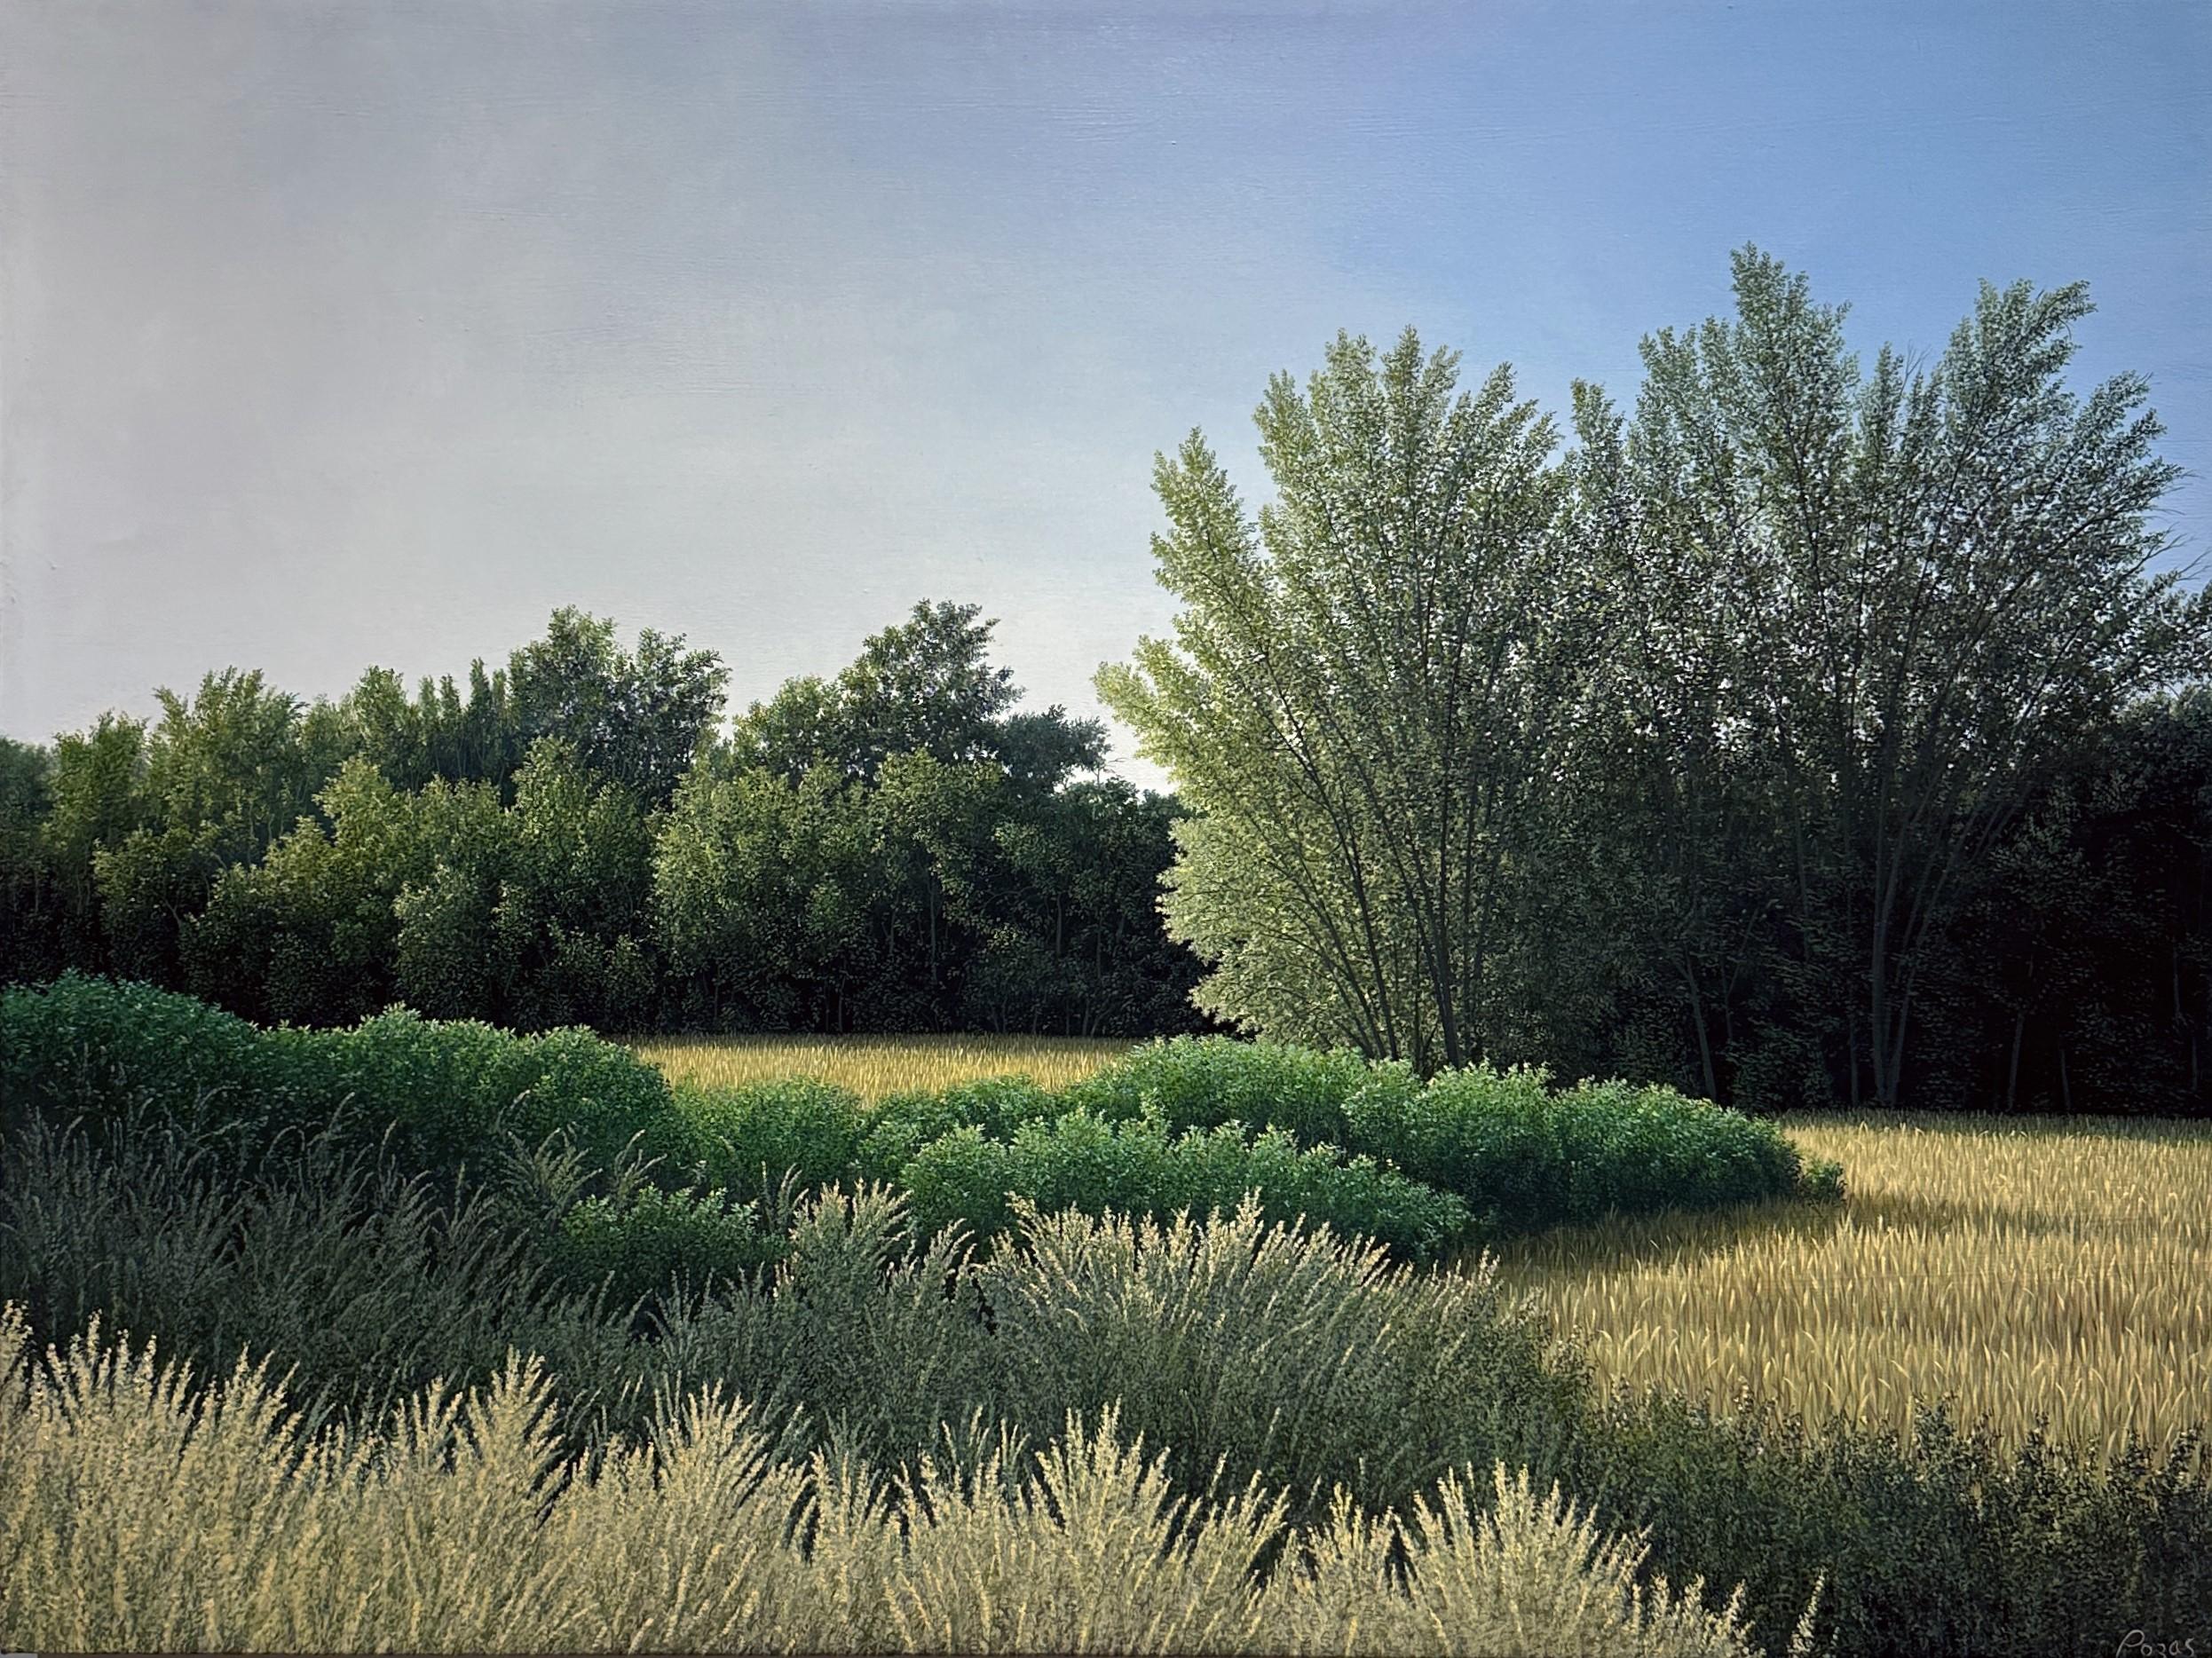 René Monzón Relova “Pozas” Landscape Painting - El Viejo Afortunado - Highly Detailed Lush Landscape, Golden Field & Dense Green